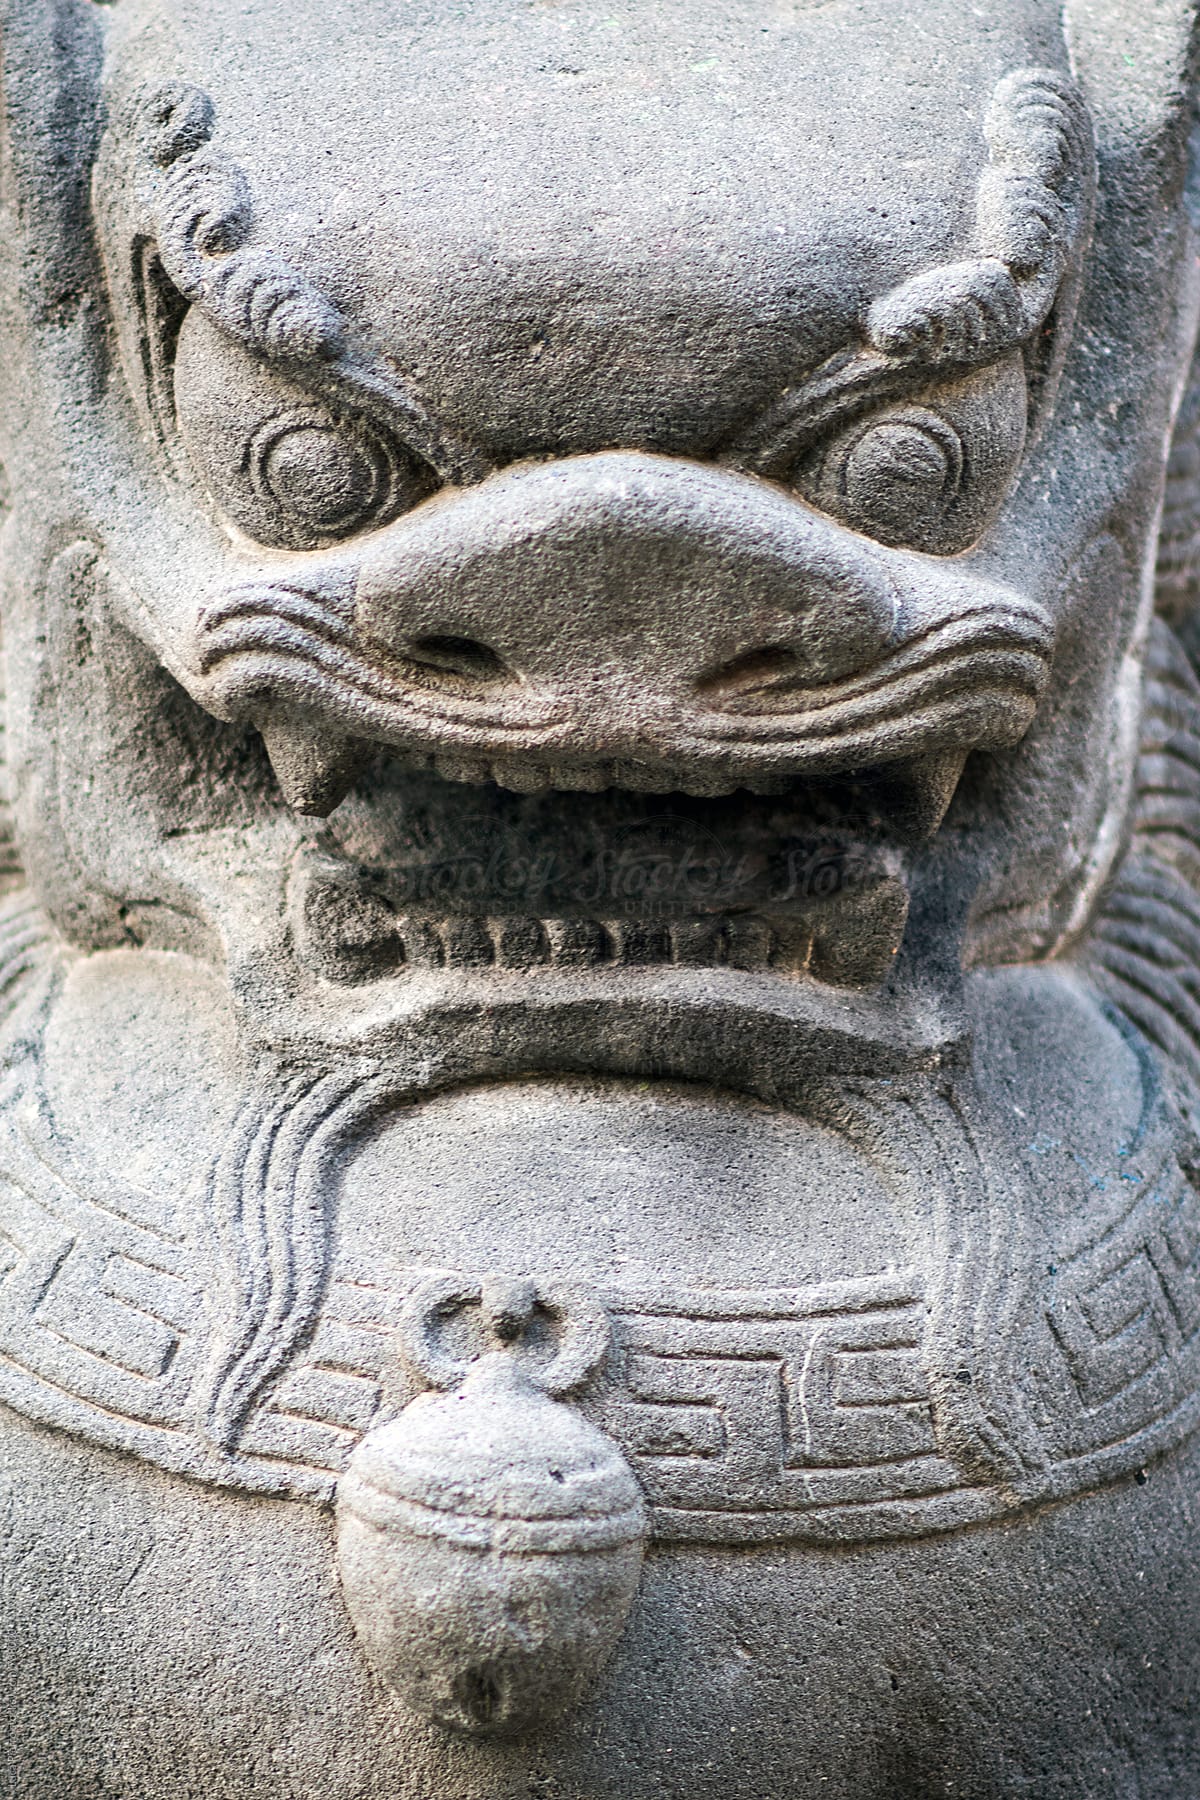 Chinese dragon statue